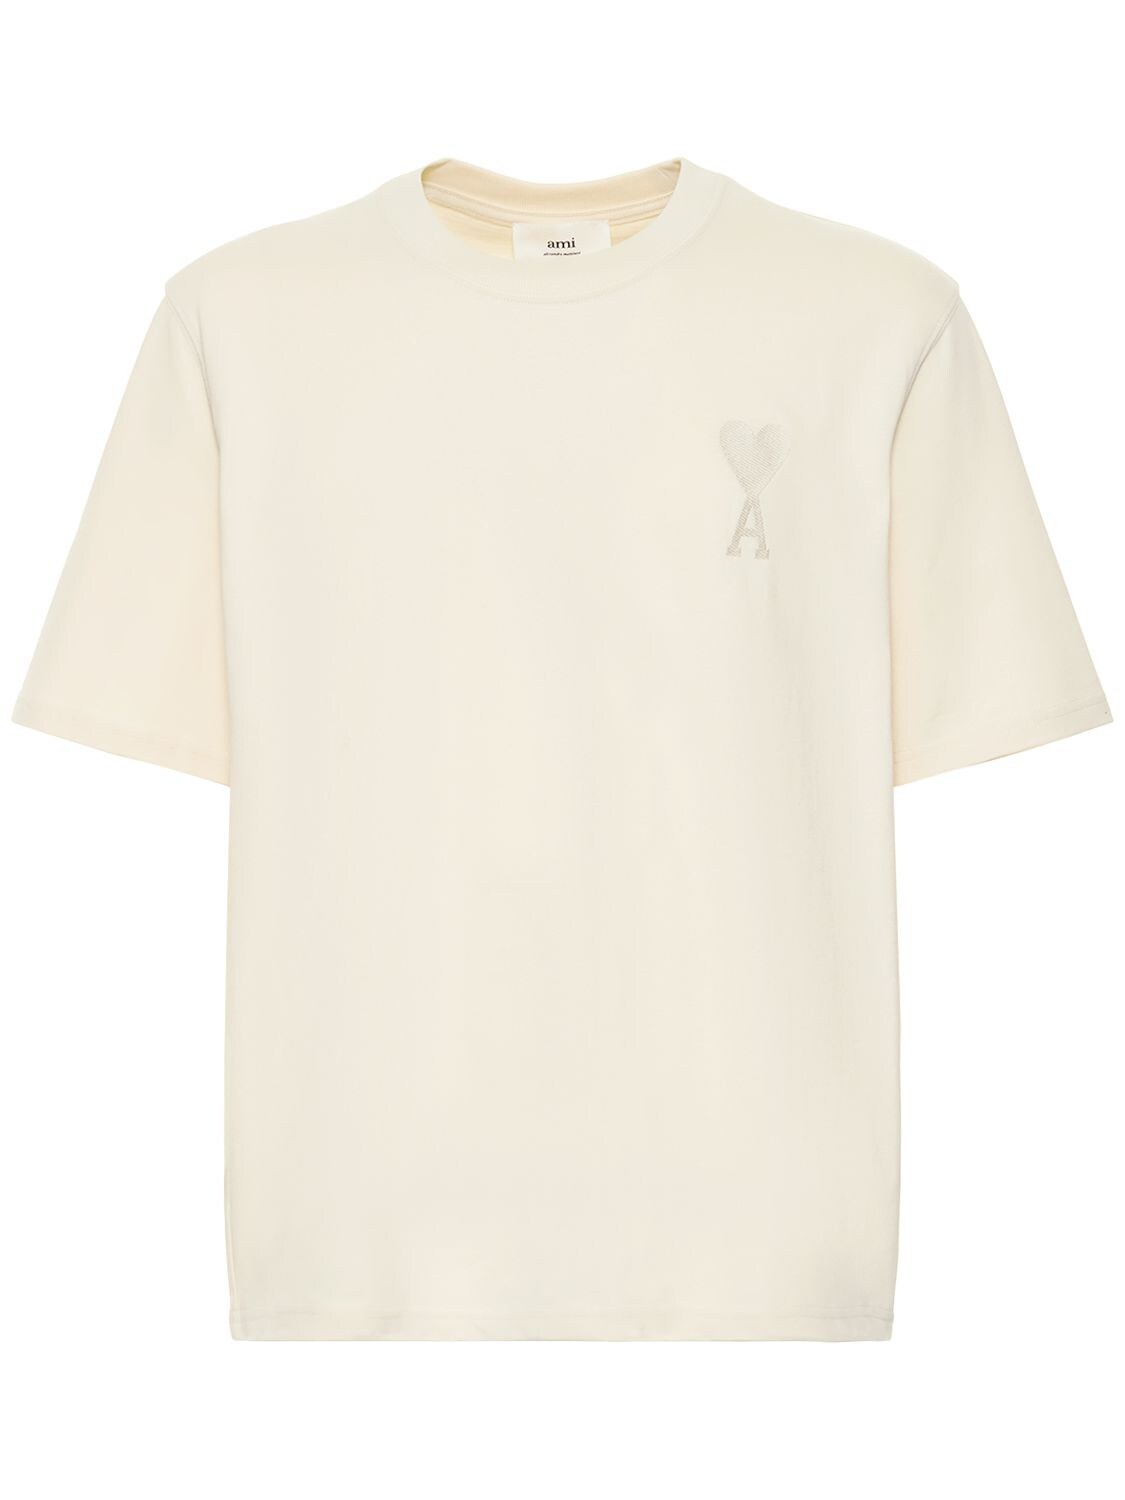 AMI PARIS Logo Embro Boxy Cotton Jersey T-shirt